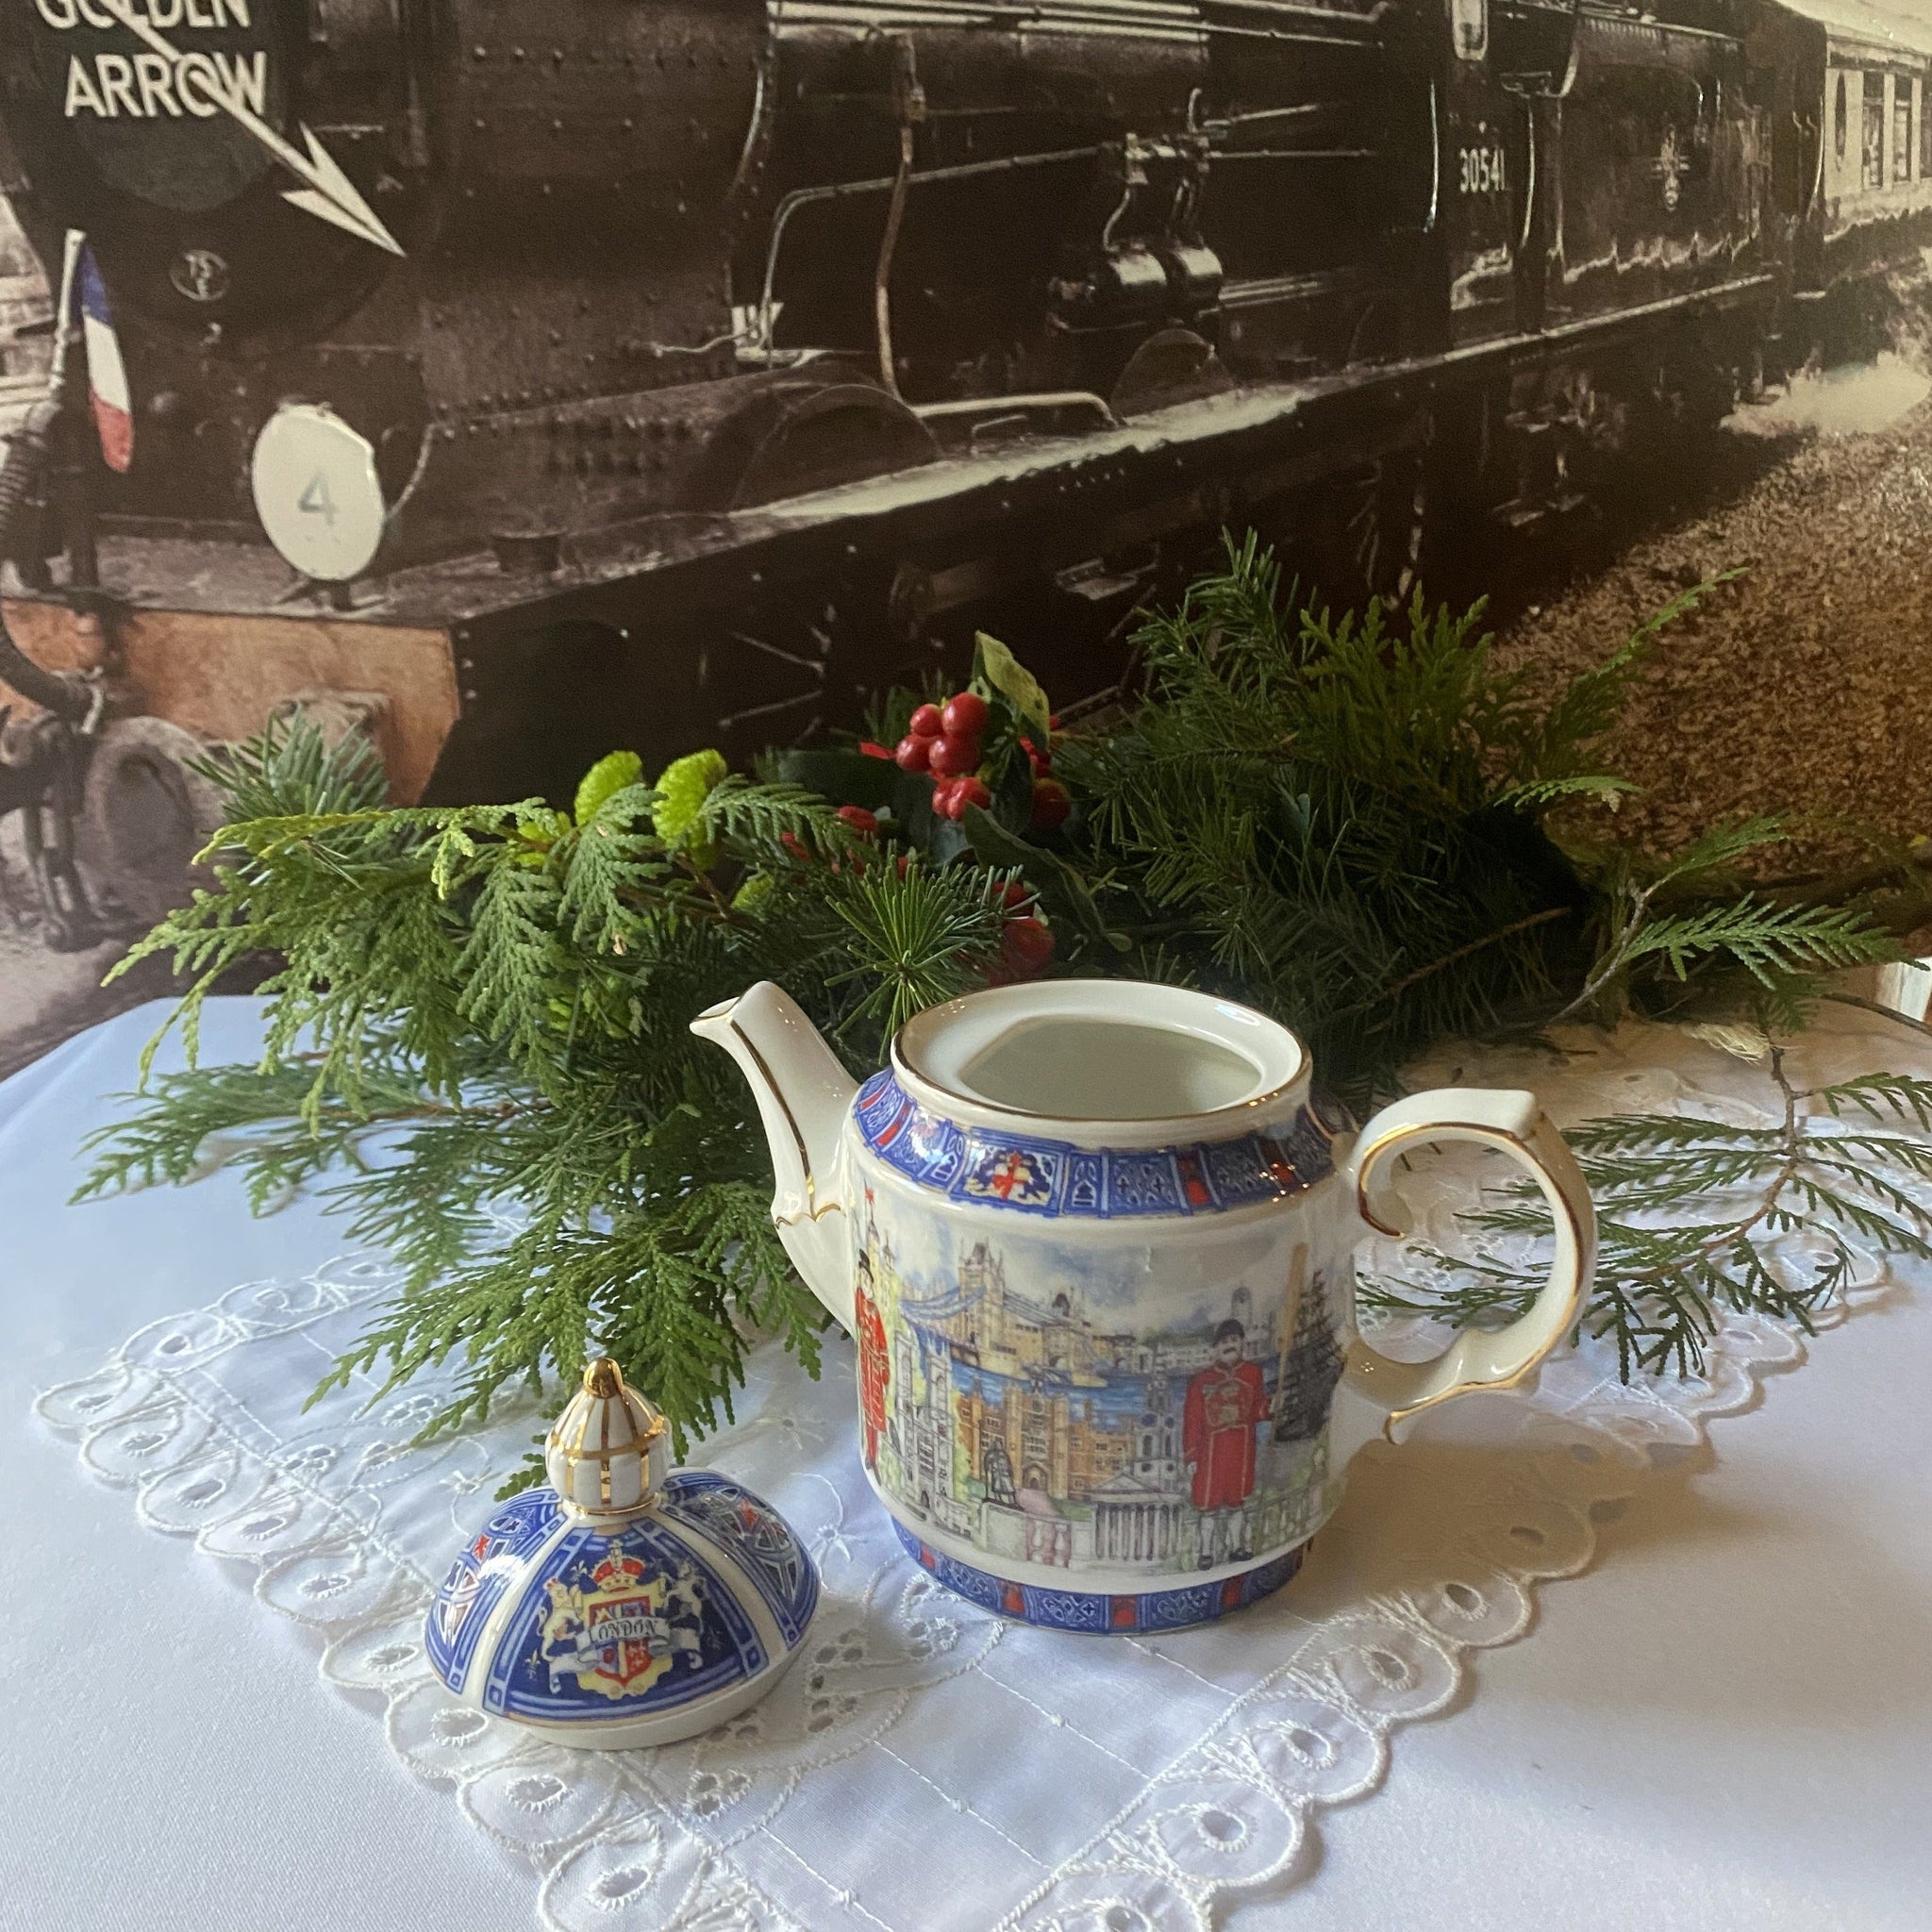 James Sadler London Heritage Collection Teapot